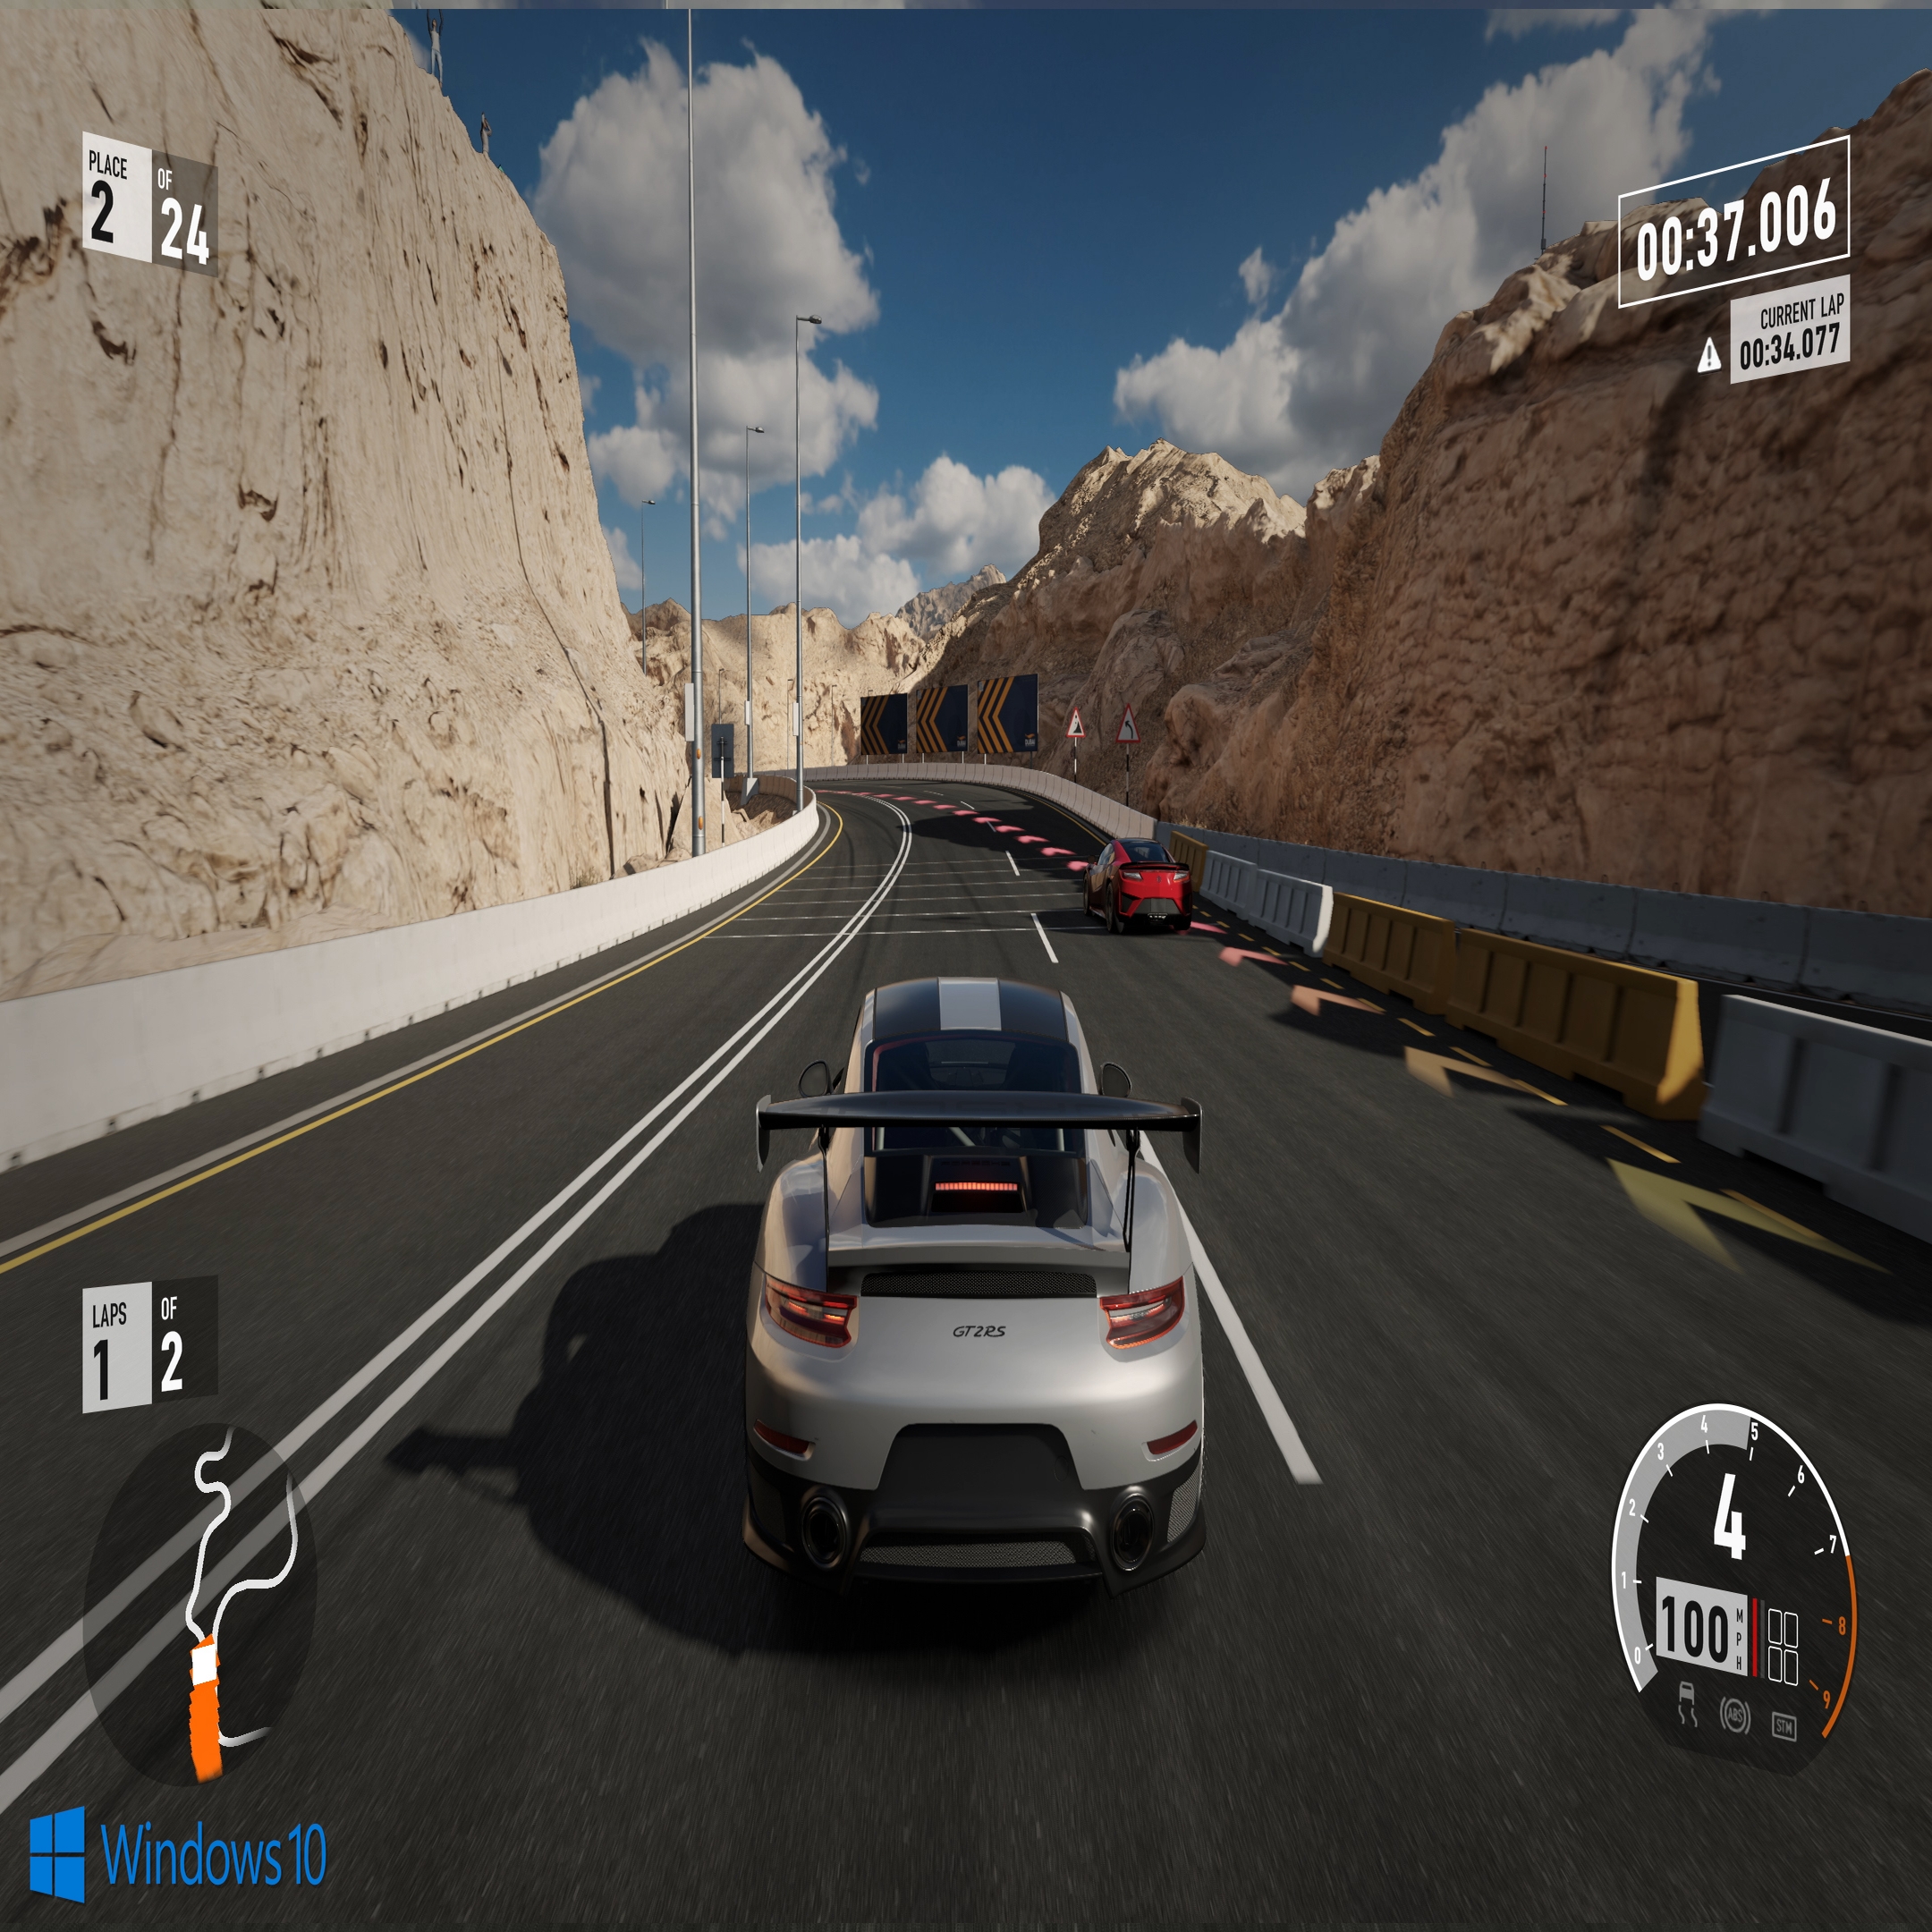  Forza Motorsport 7 – Standard Edition - Xbox One : Microsoft  Corporation: Video Games